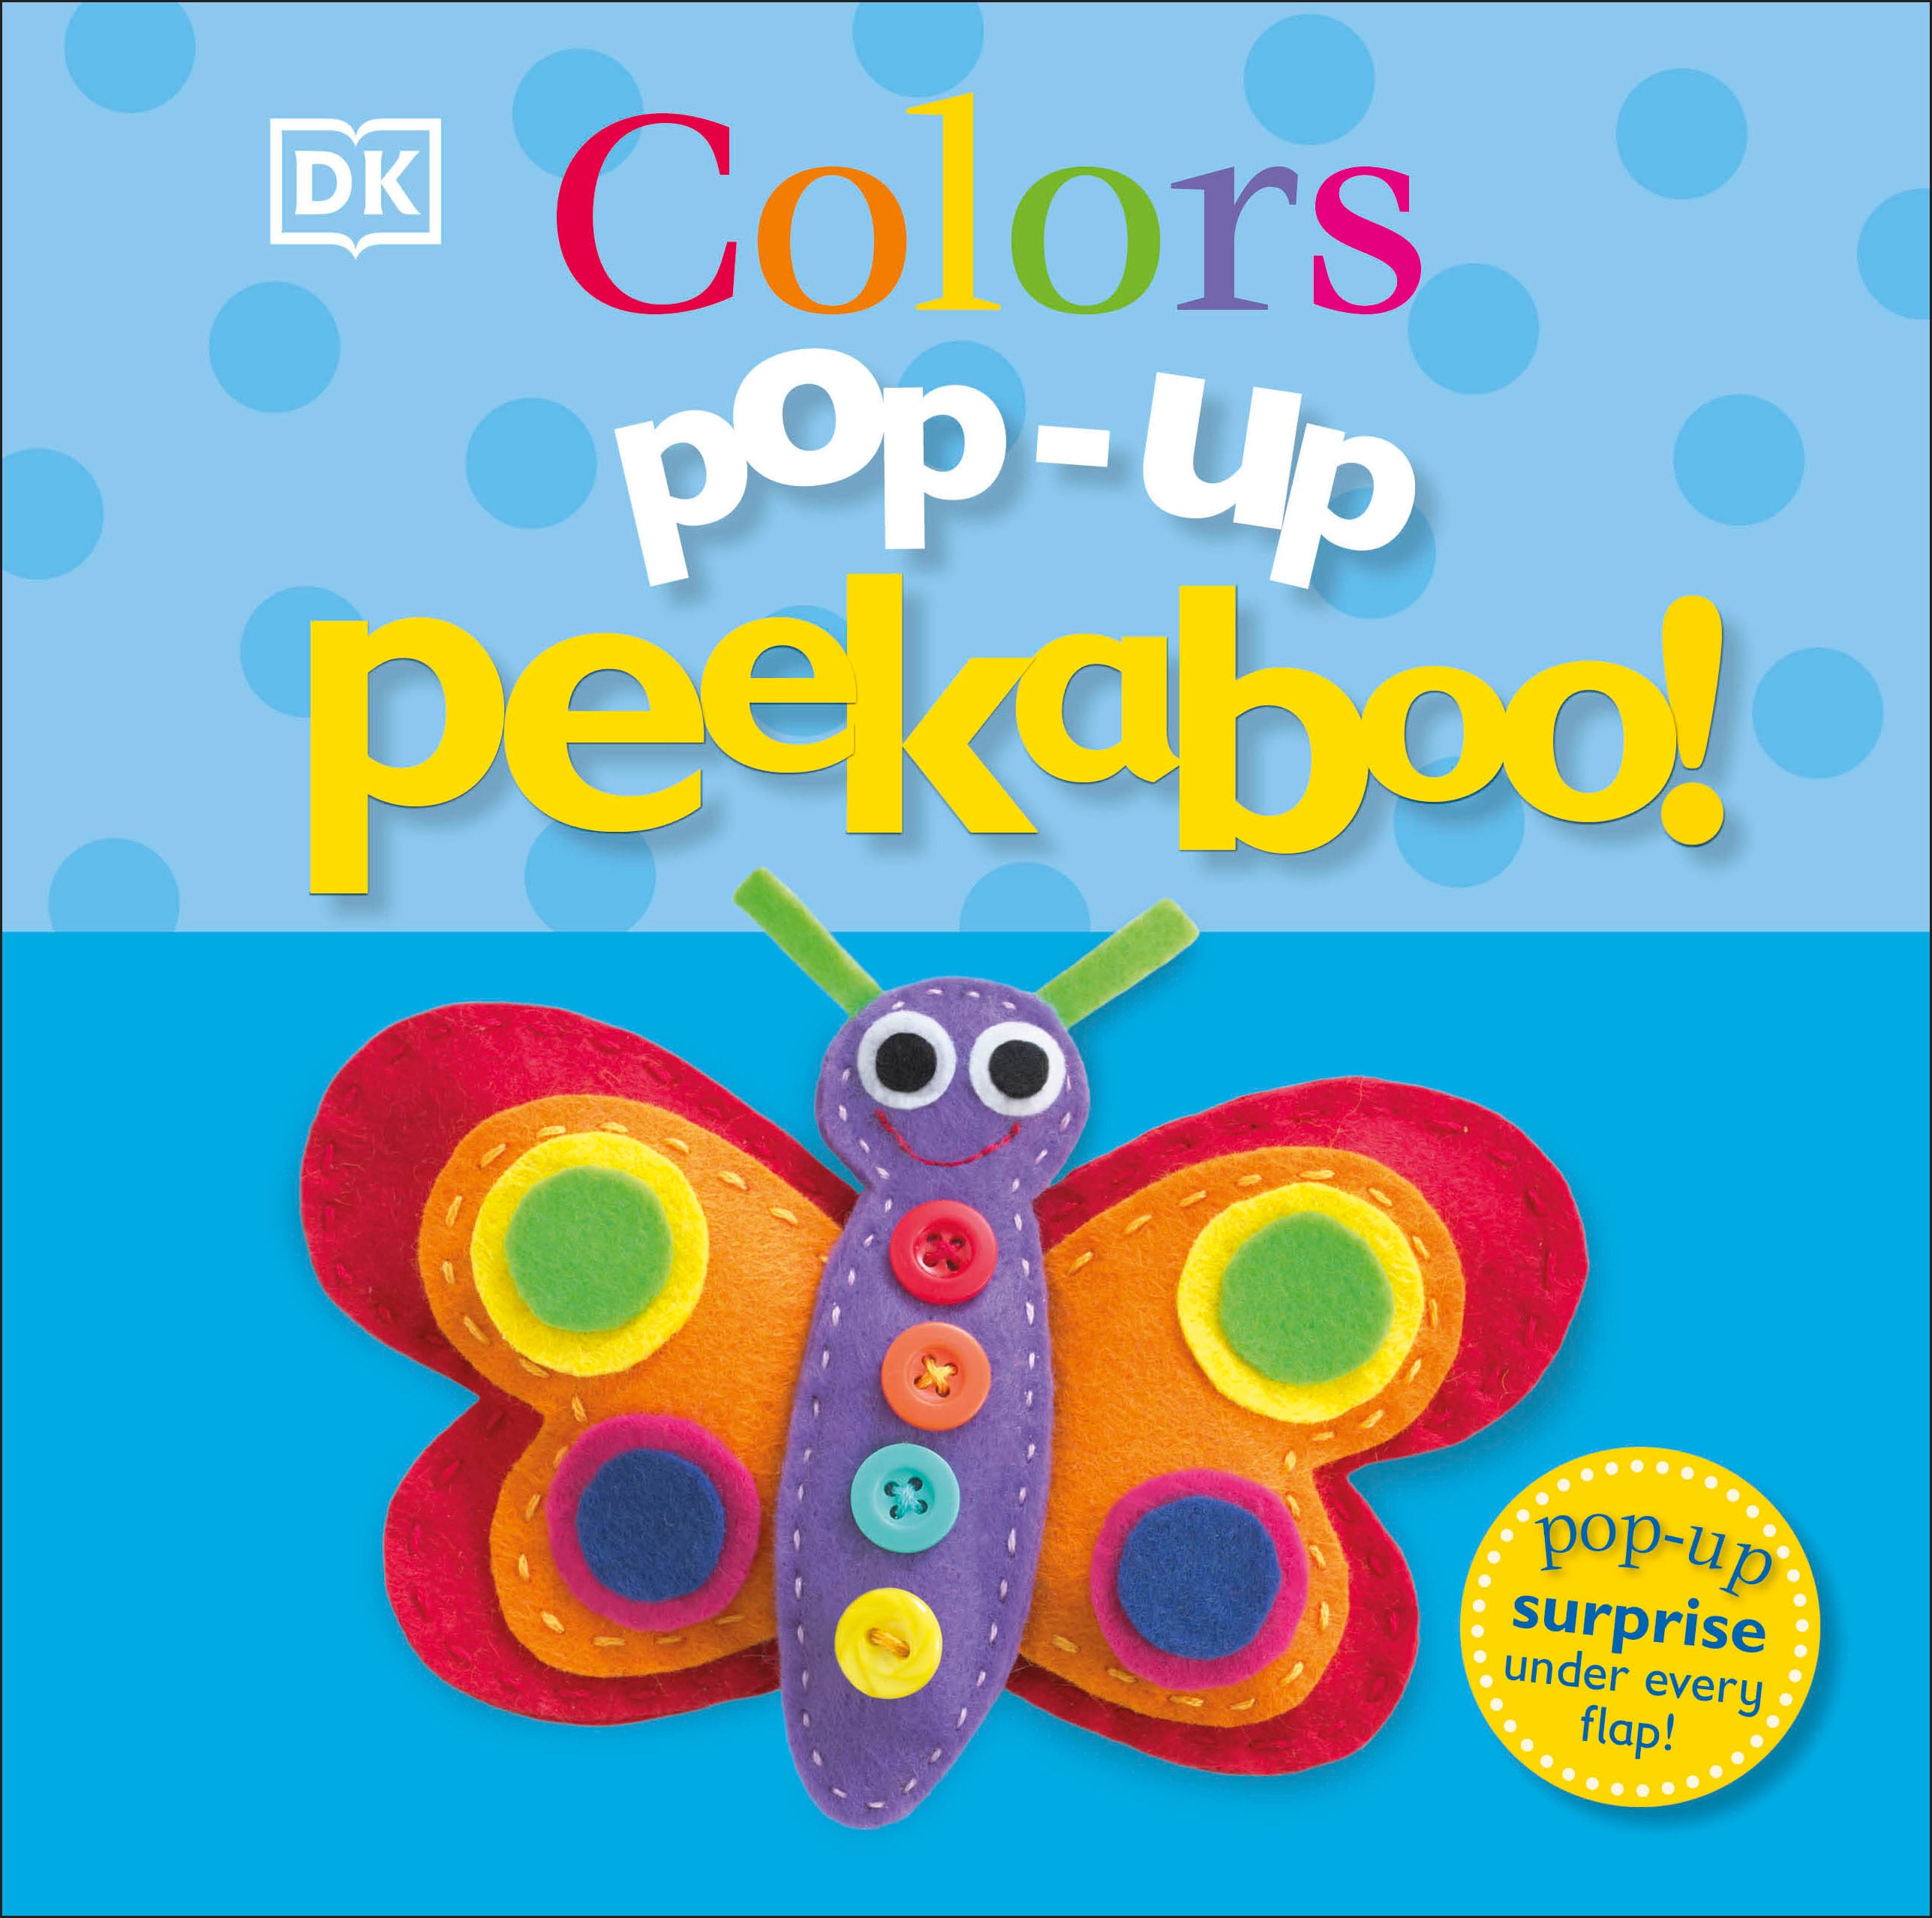 Pop-Up Peekaboo! Colors